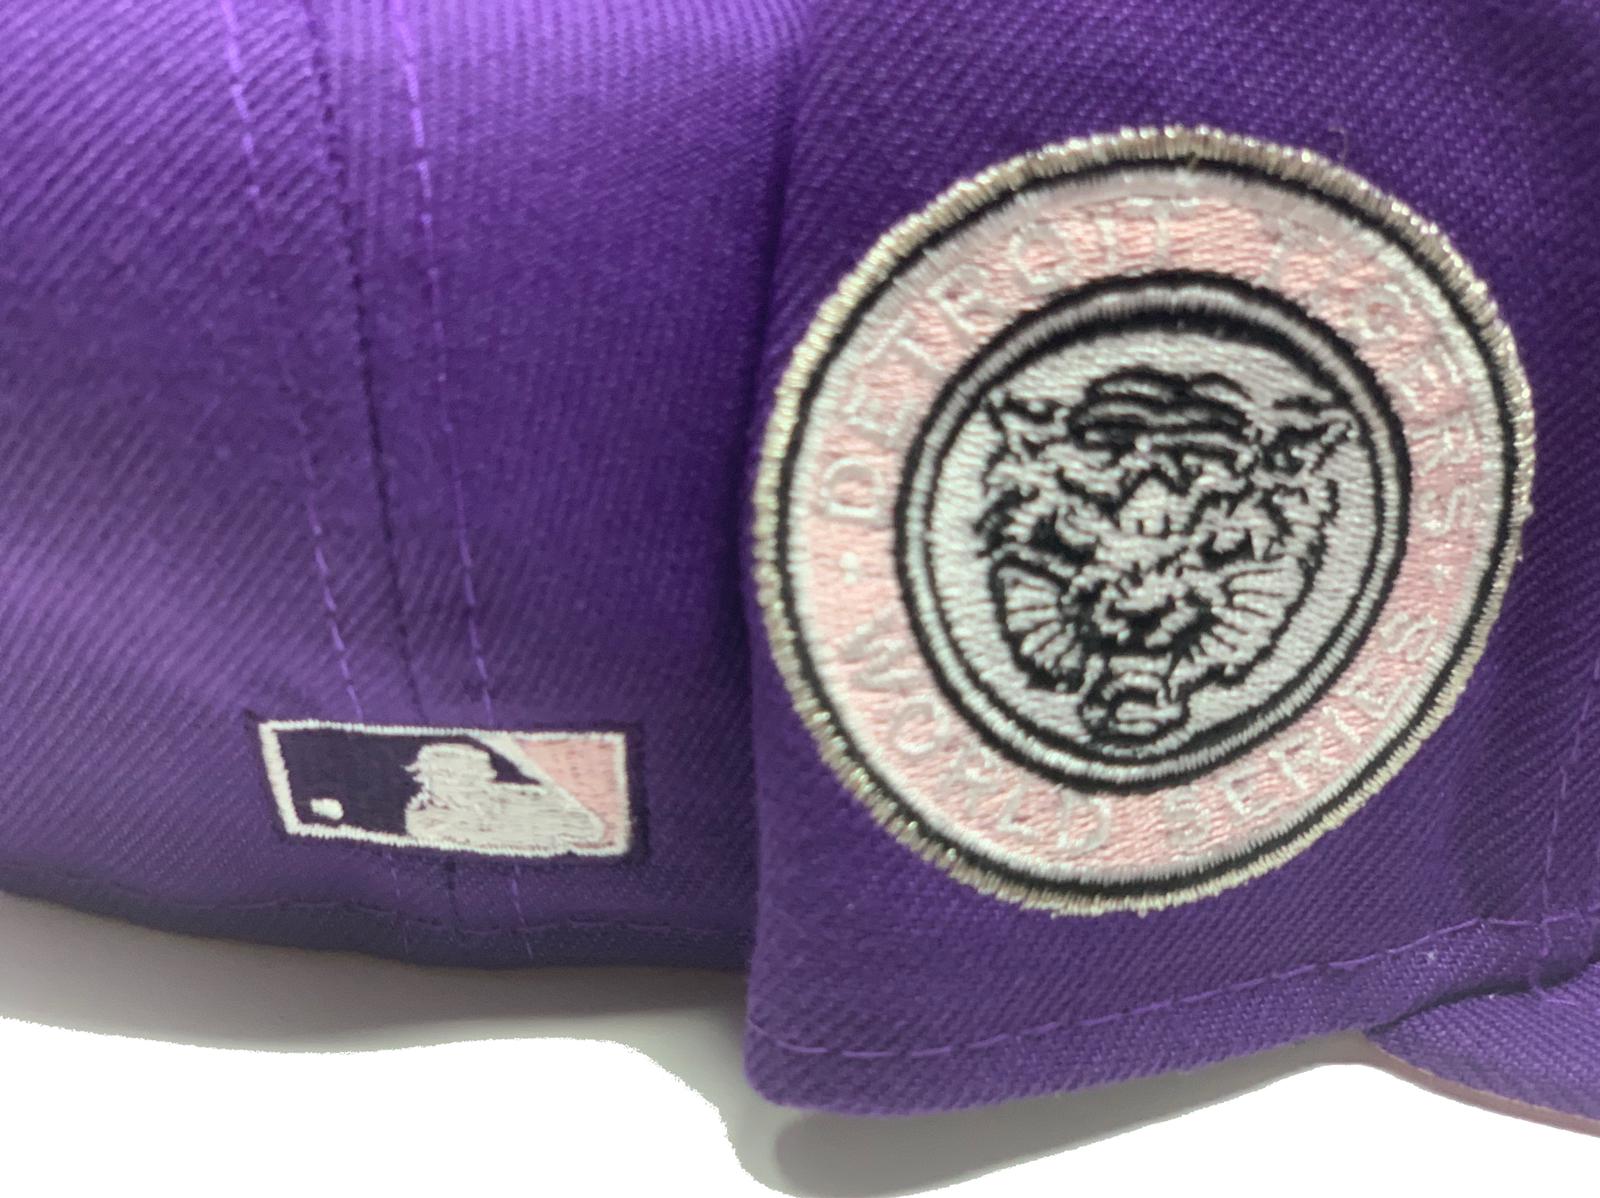 Light Pink Detroit Tigers Purple Bottom 59fifty New Era Fitted – Sports  World 165